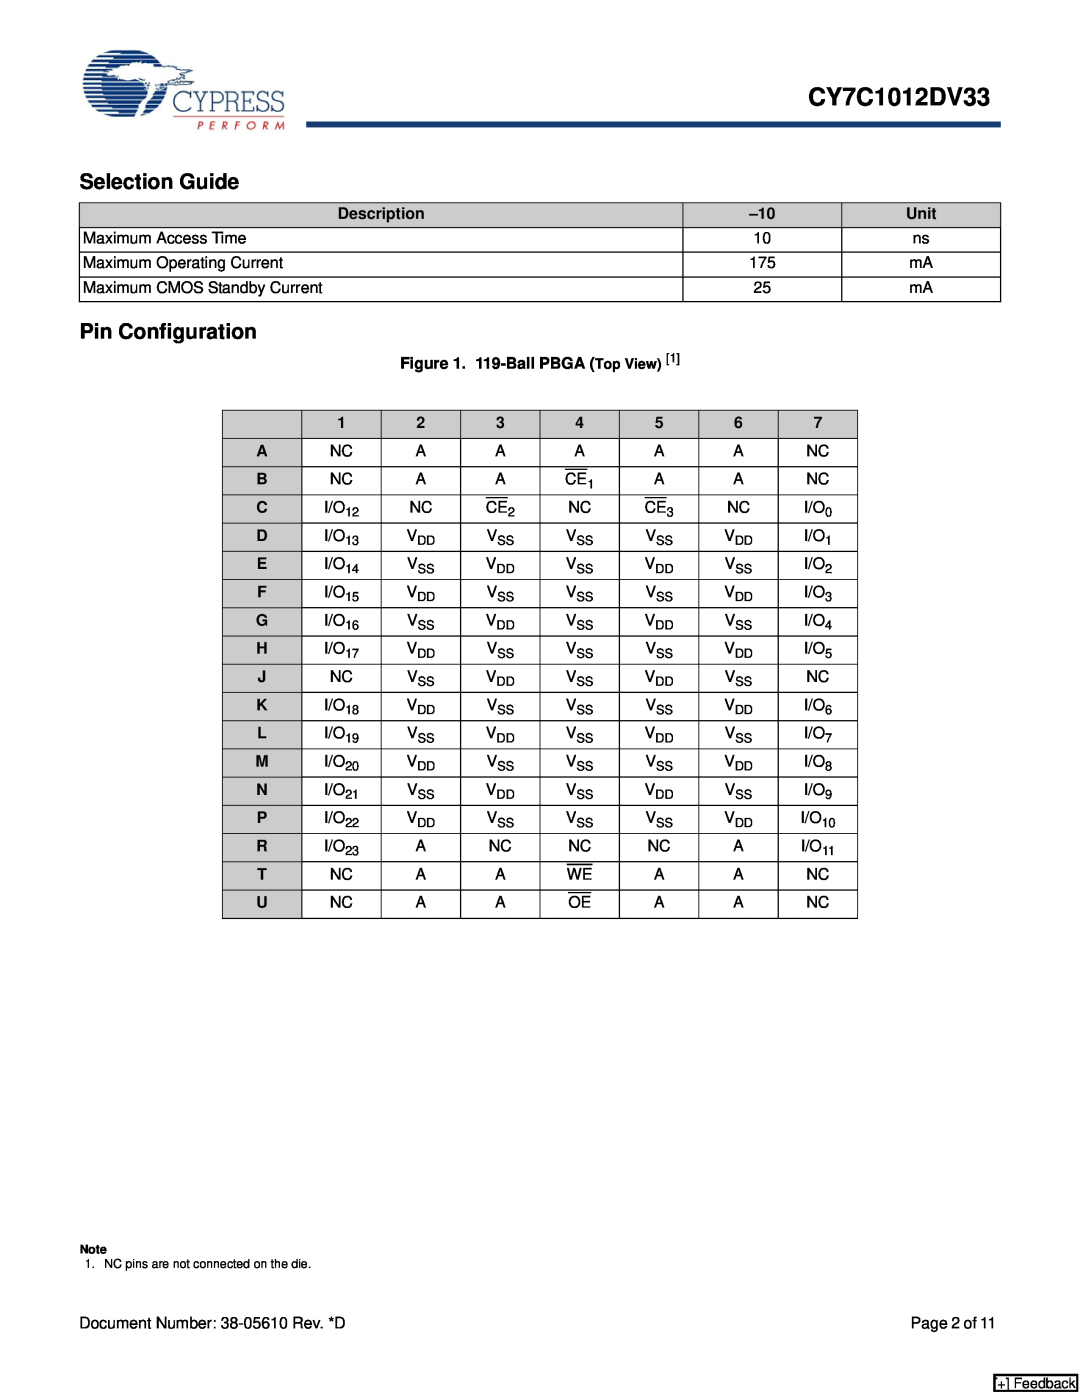 Cypress CY7C1012DV33 manual Selection Guide, Pin Configuration, Description, Unit, 119-Ball PBGA Top View 